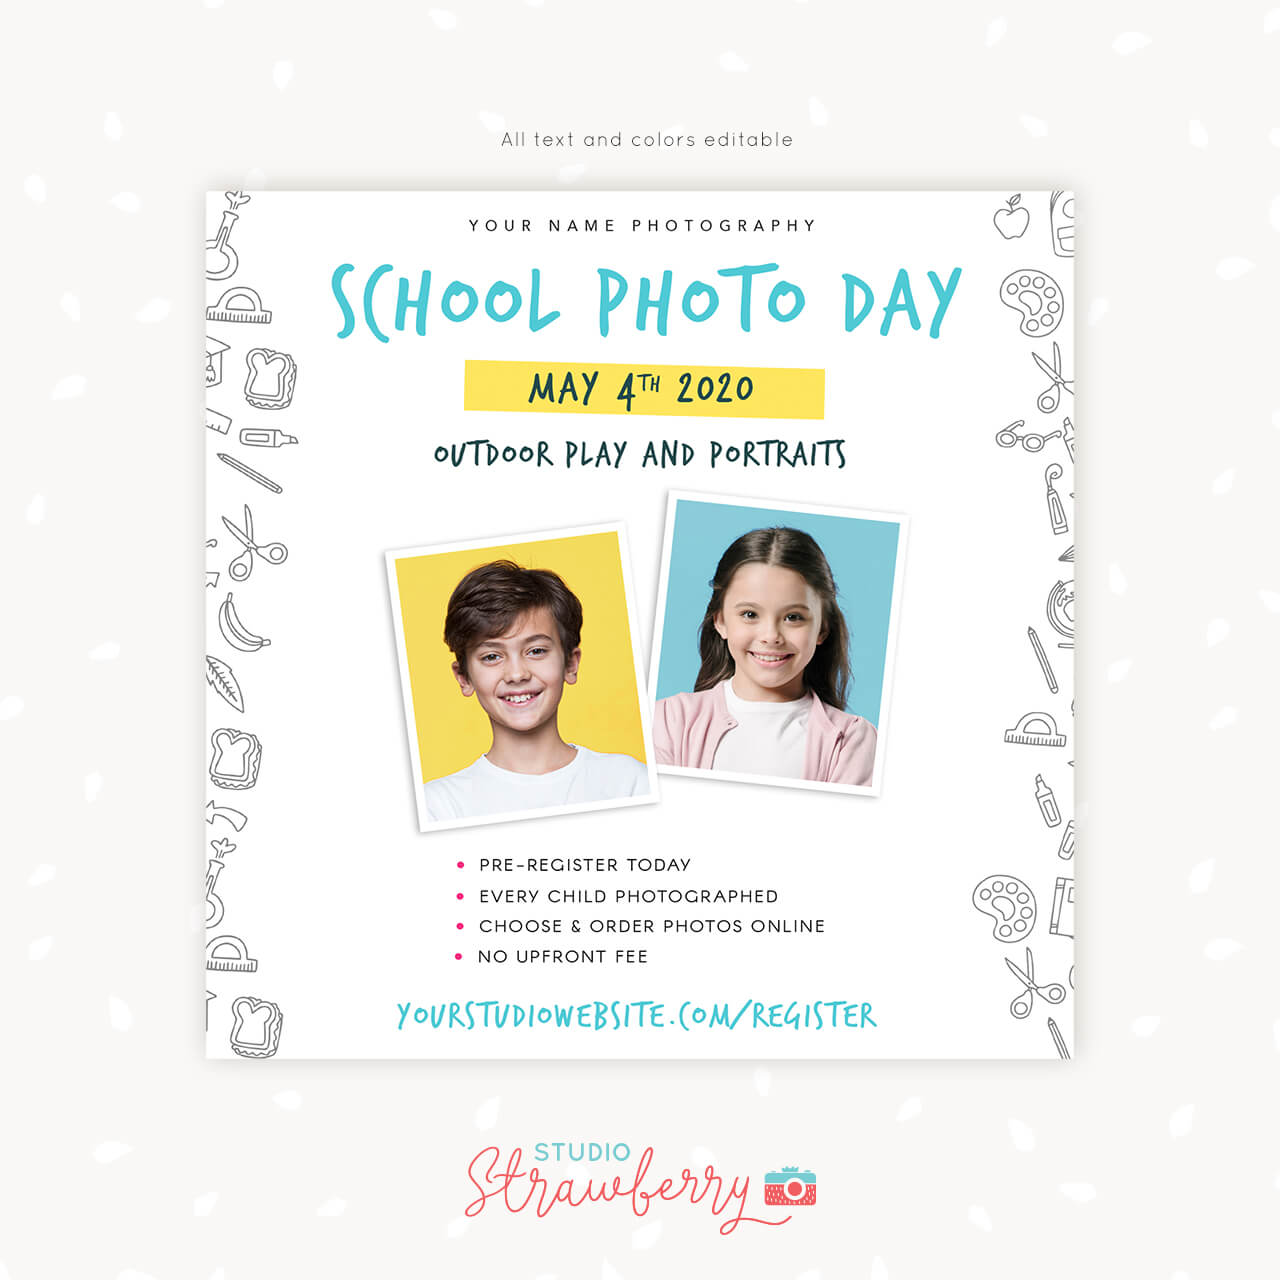 School photography marketing photo day